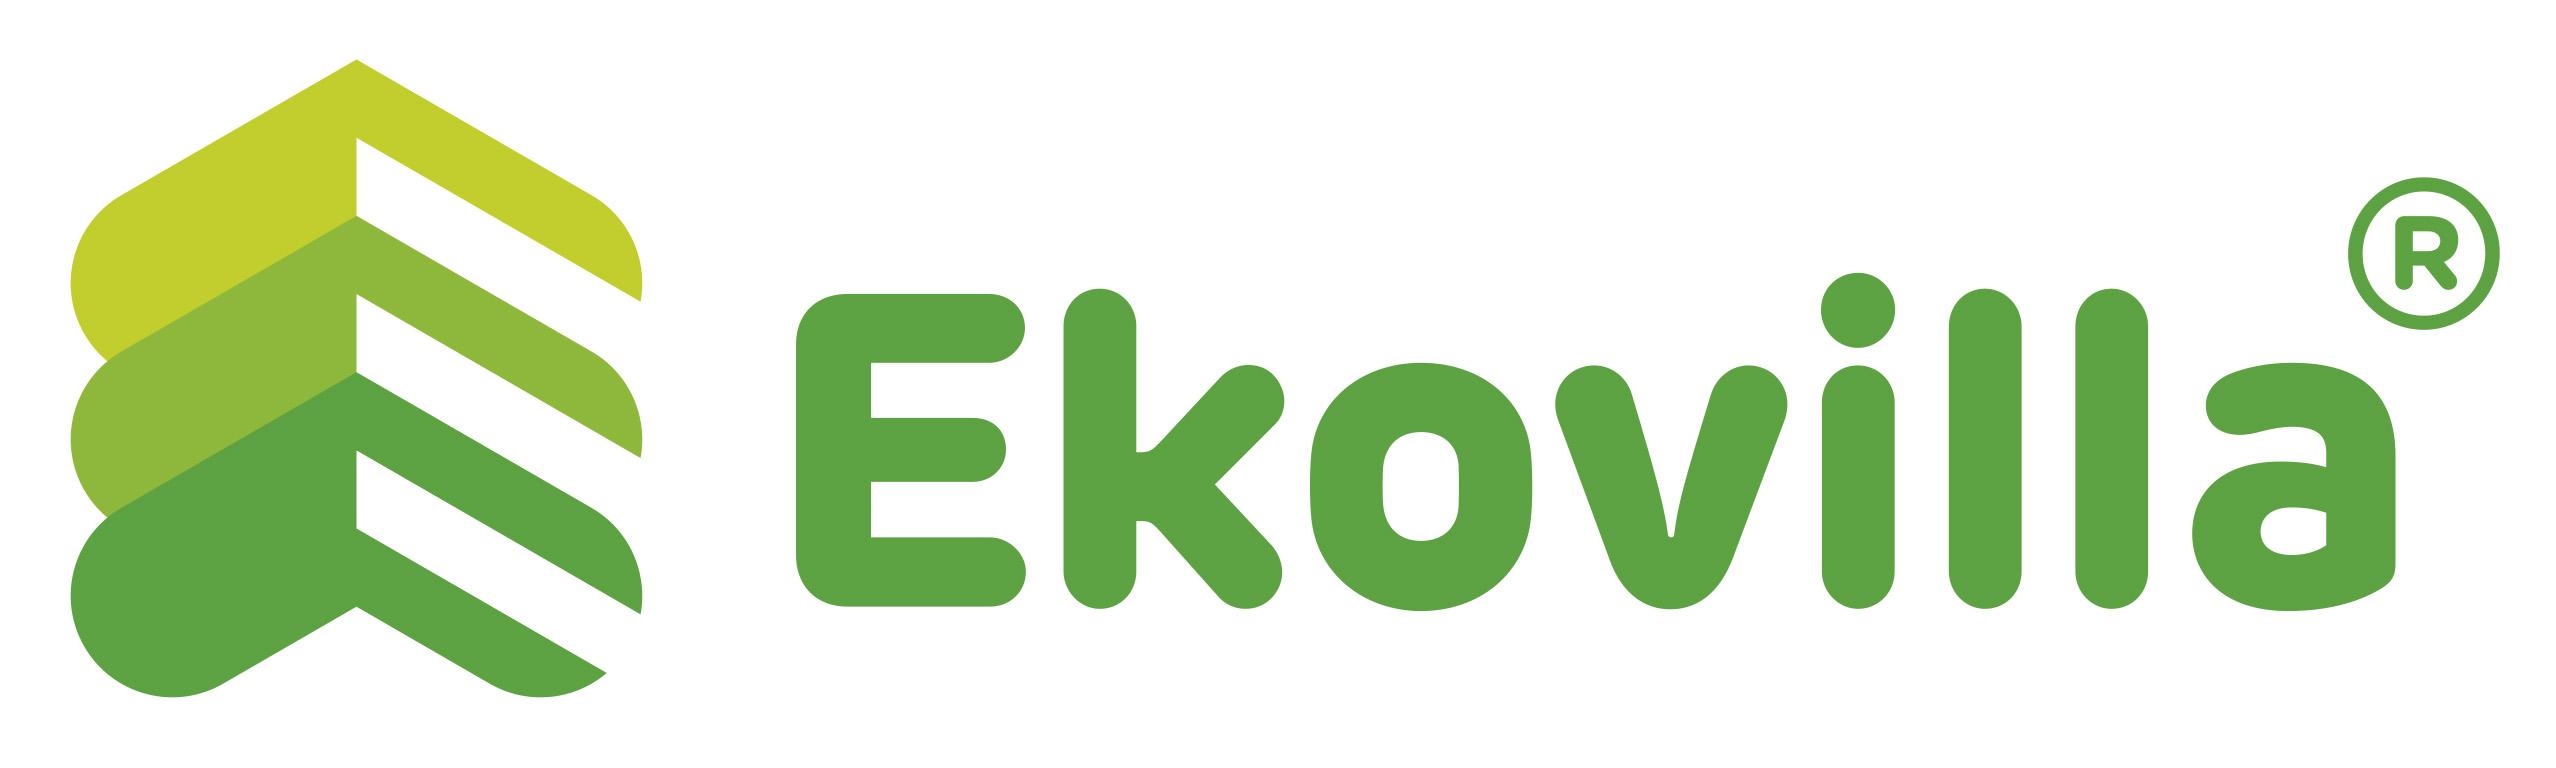 Ekovilla logo